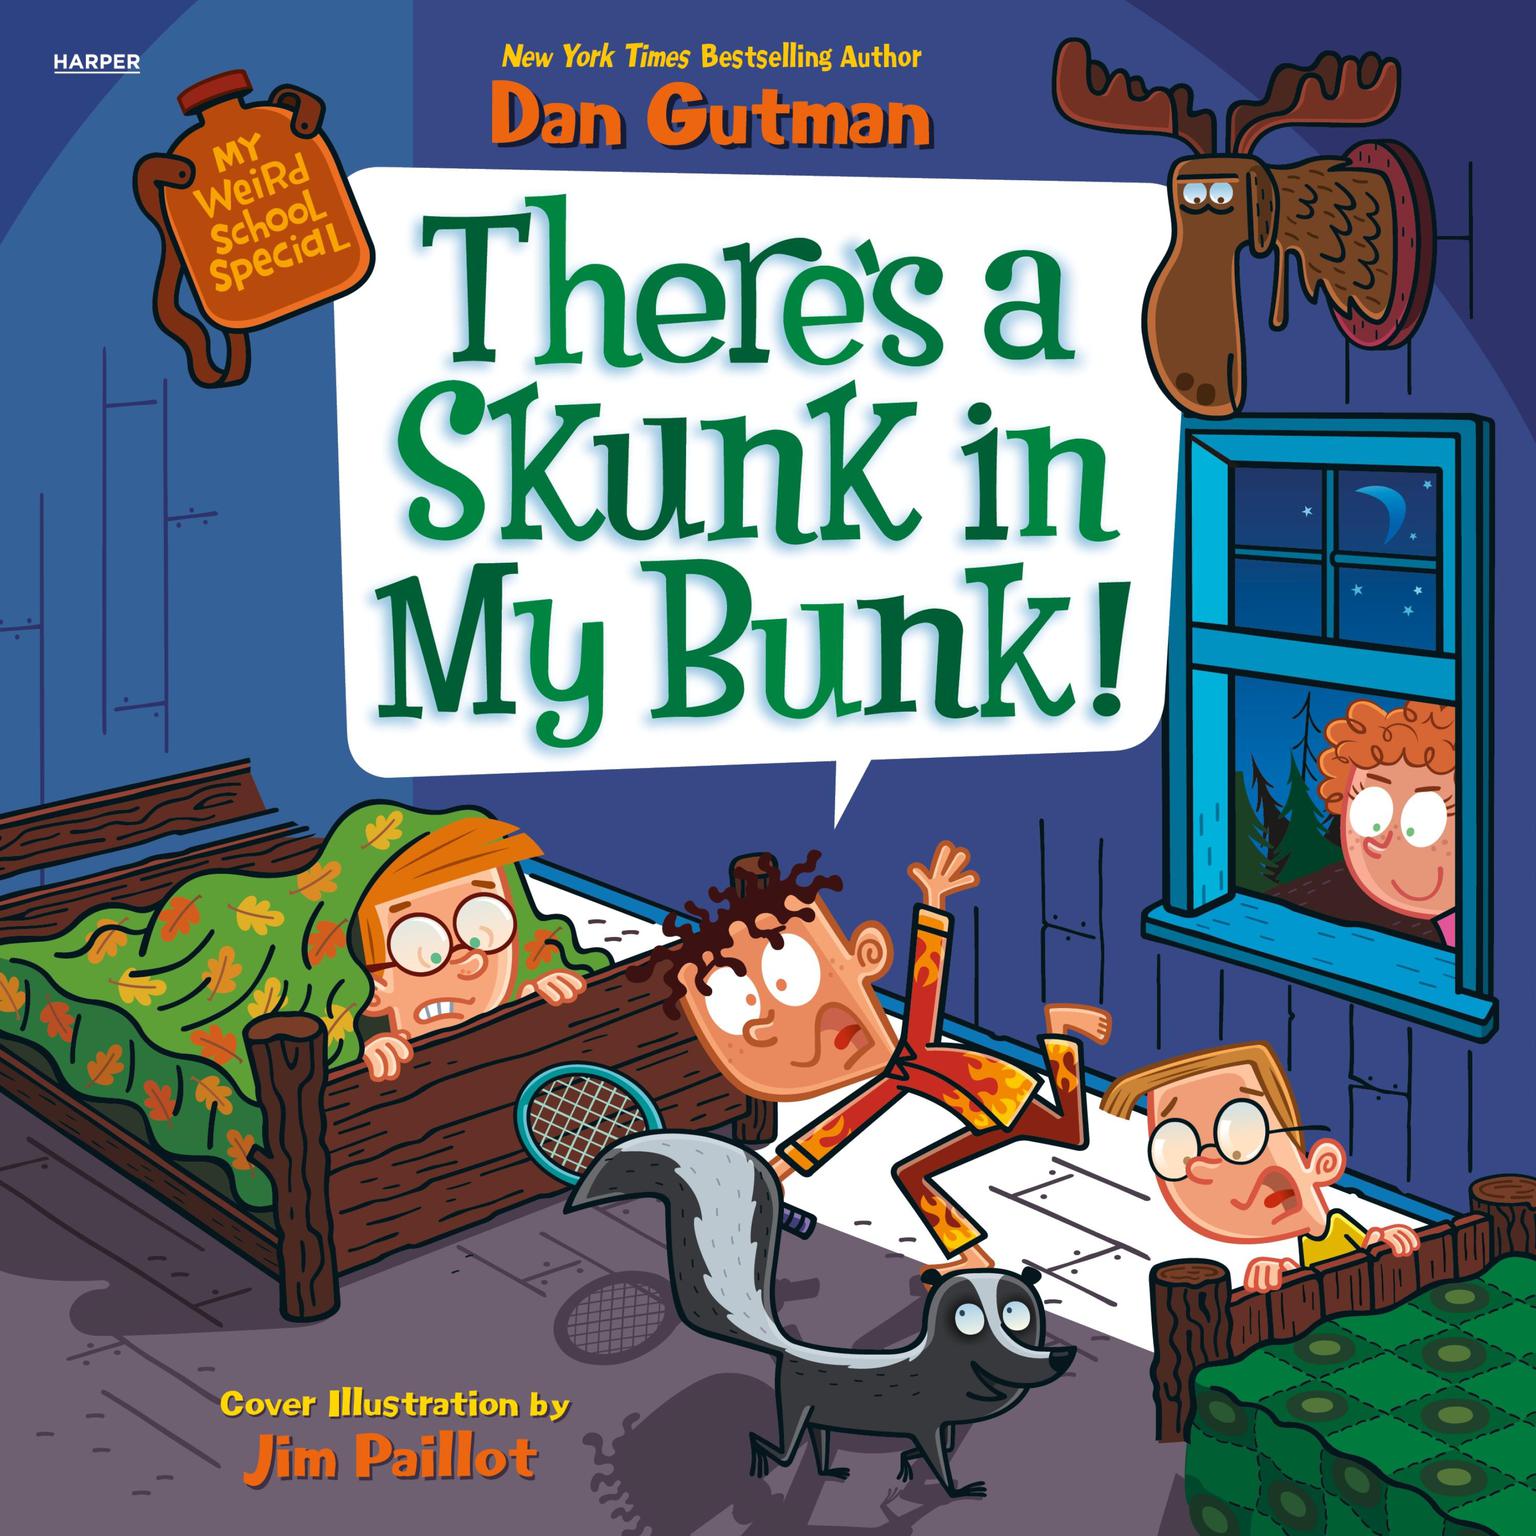 My Weird School Special: There’s a Skunk in My Bunk! Audiobook, by Dan Gutman